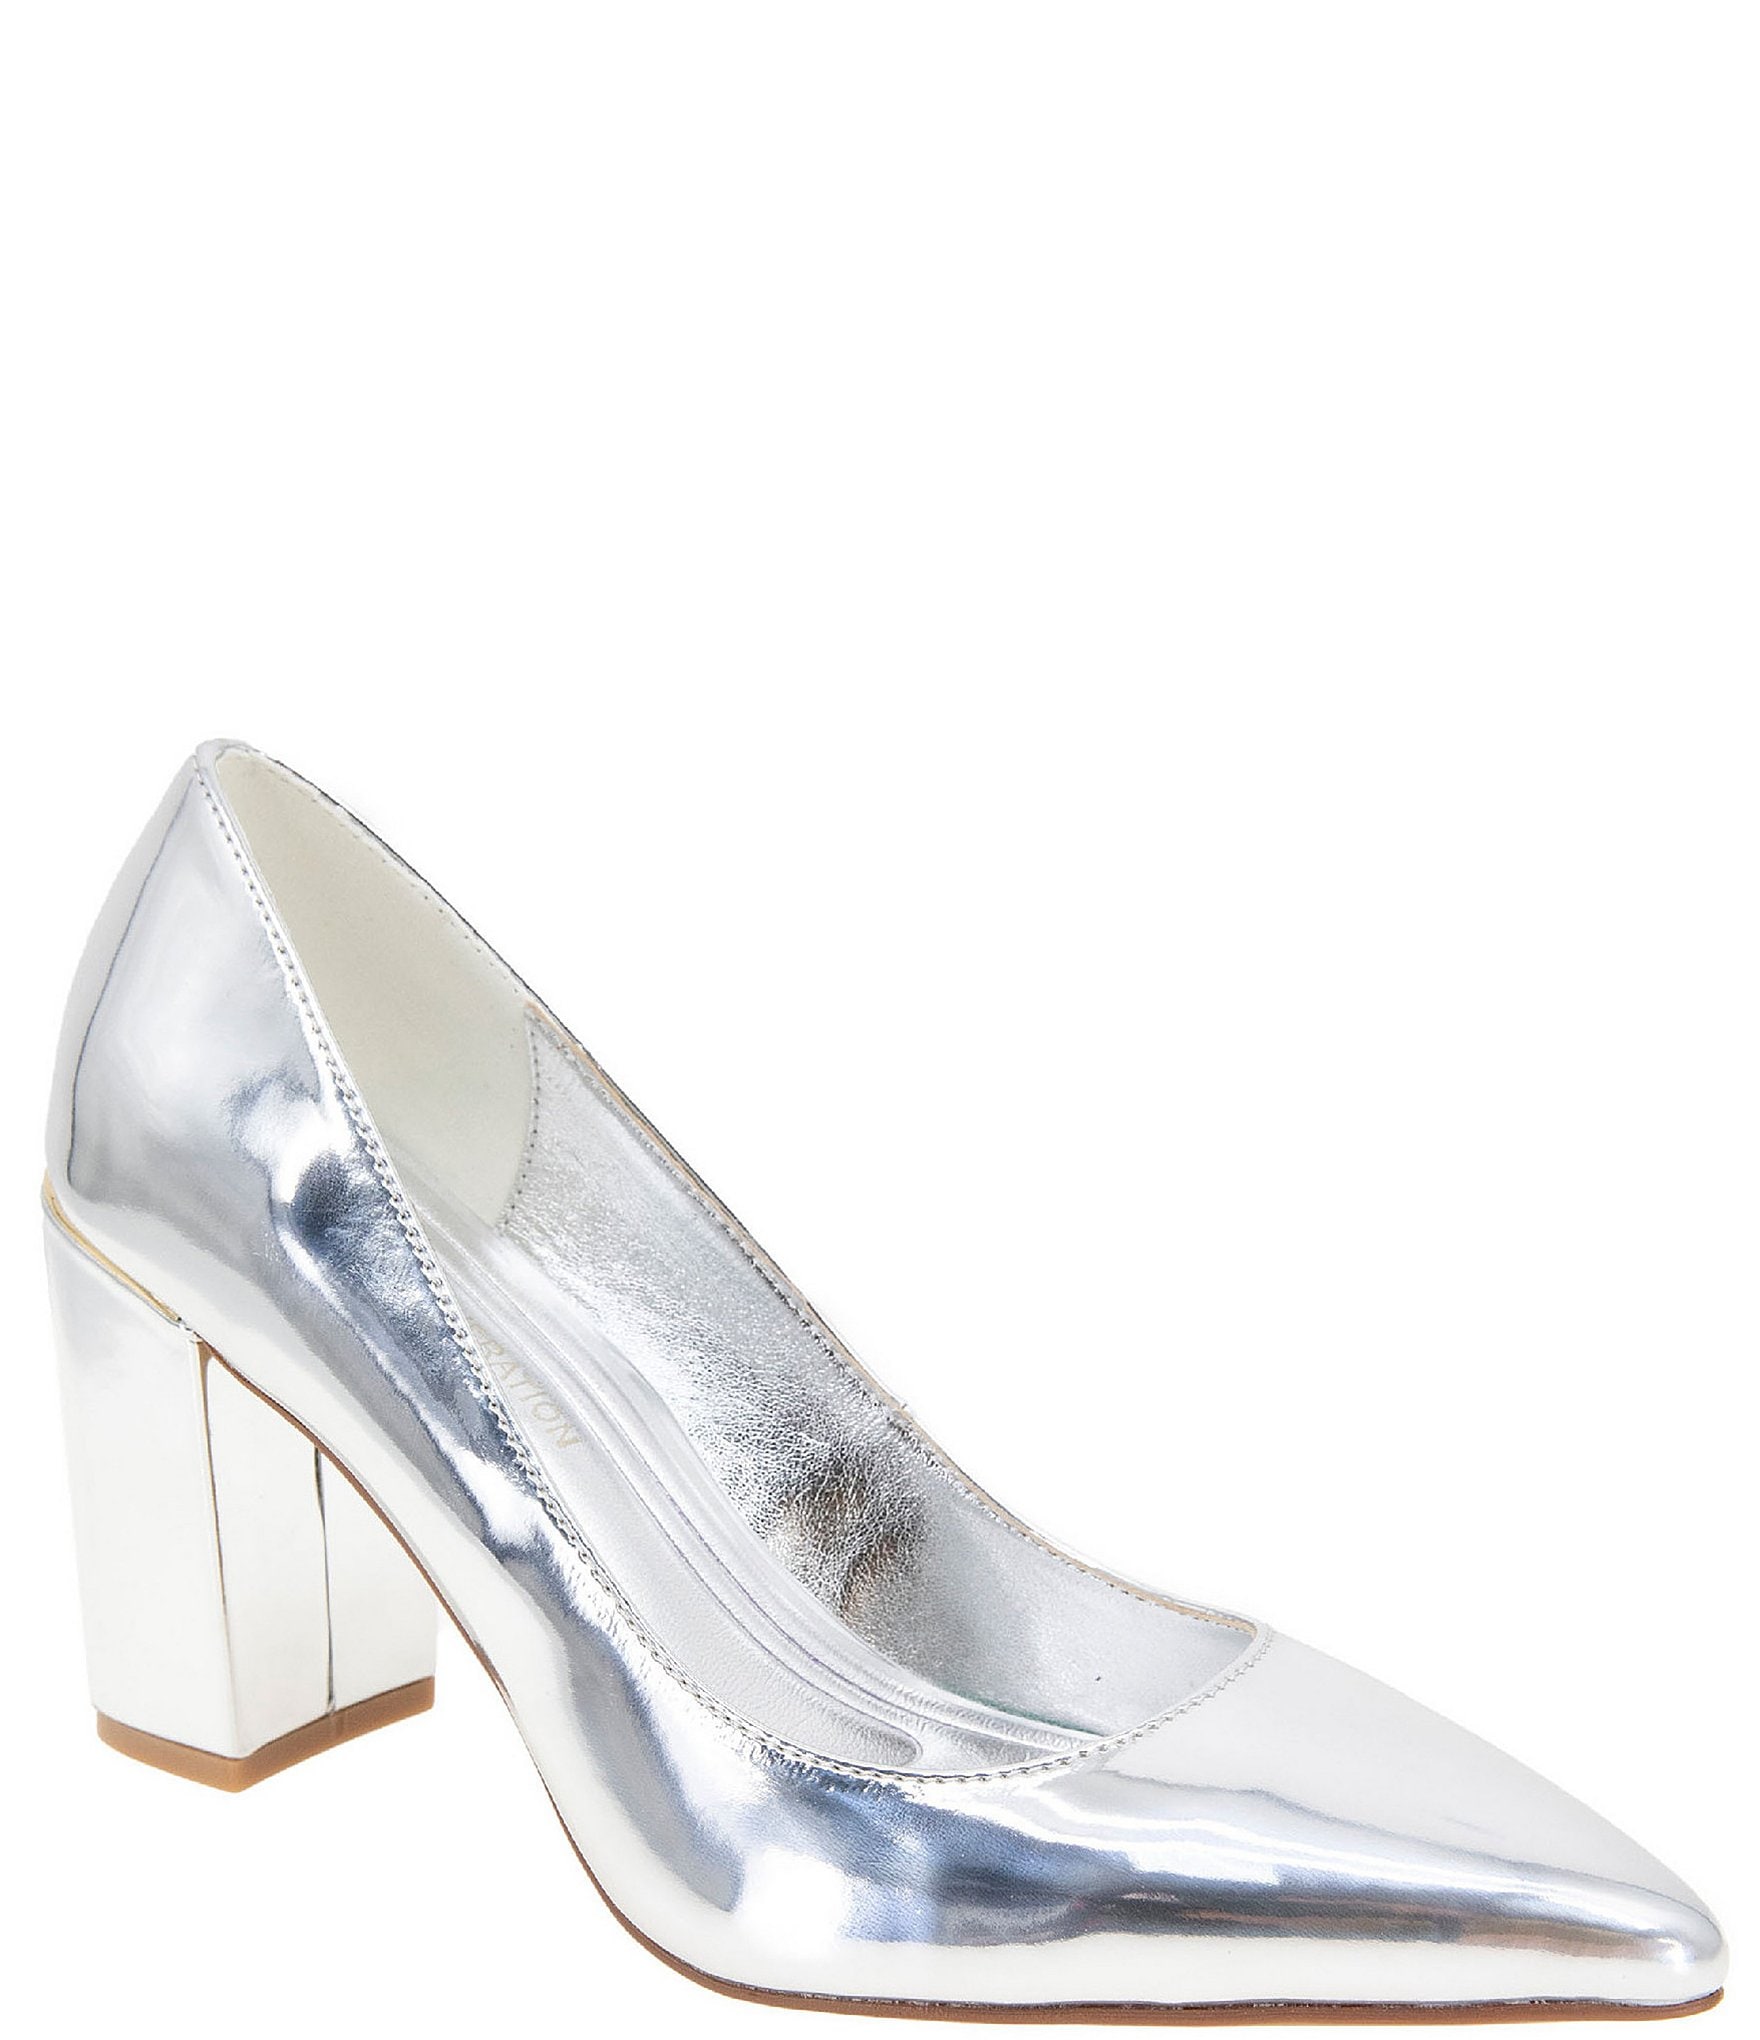 Sezane | Shoes | New Sezane Low Helena Courts Silver Glitter Block Heels |  Poshmark